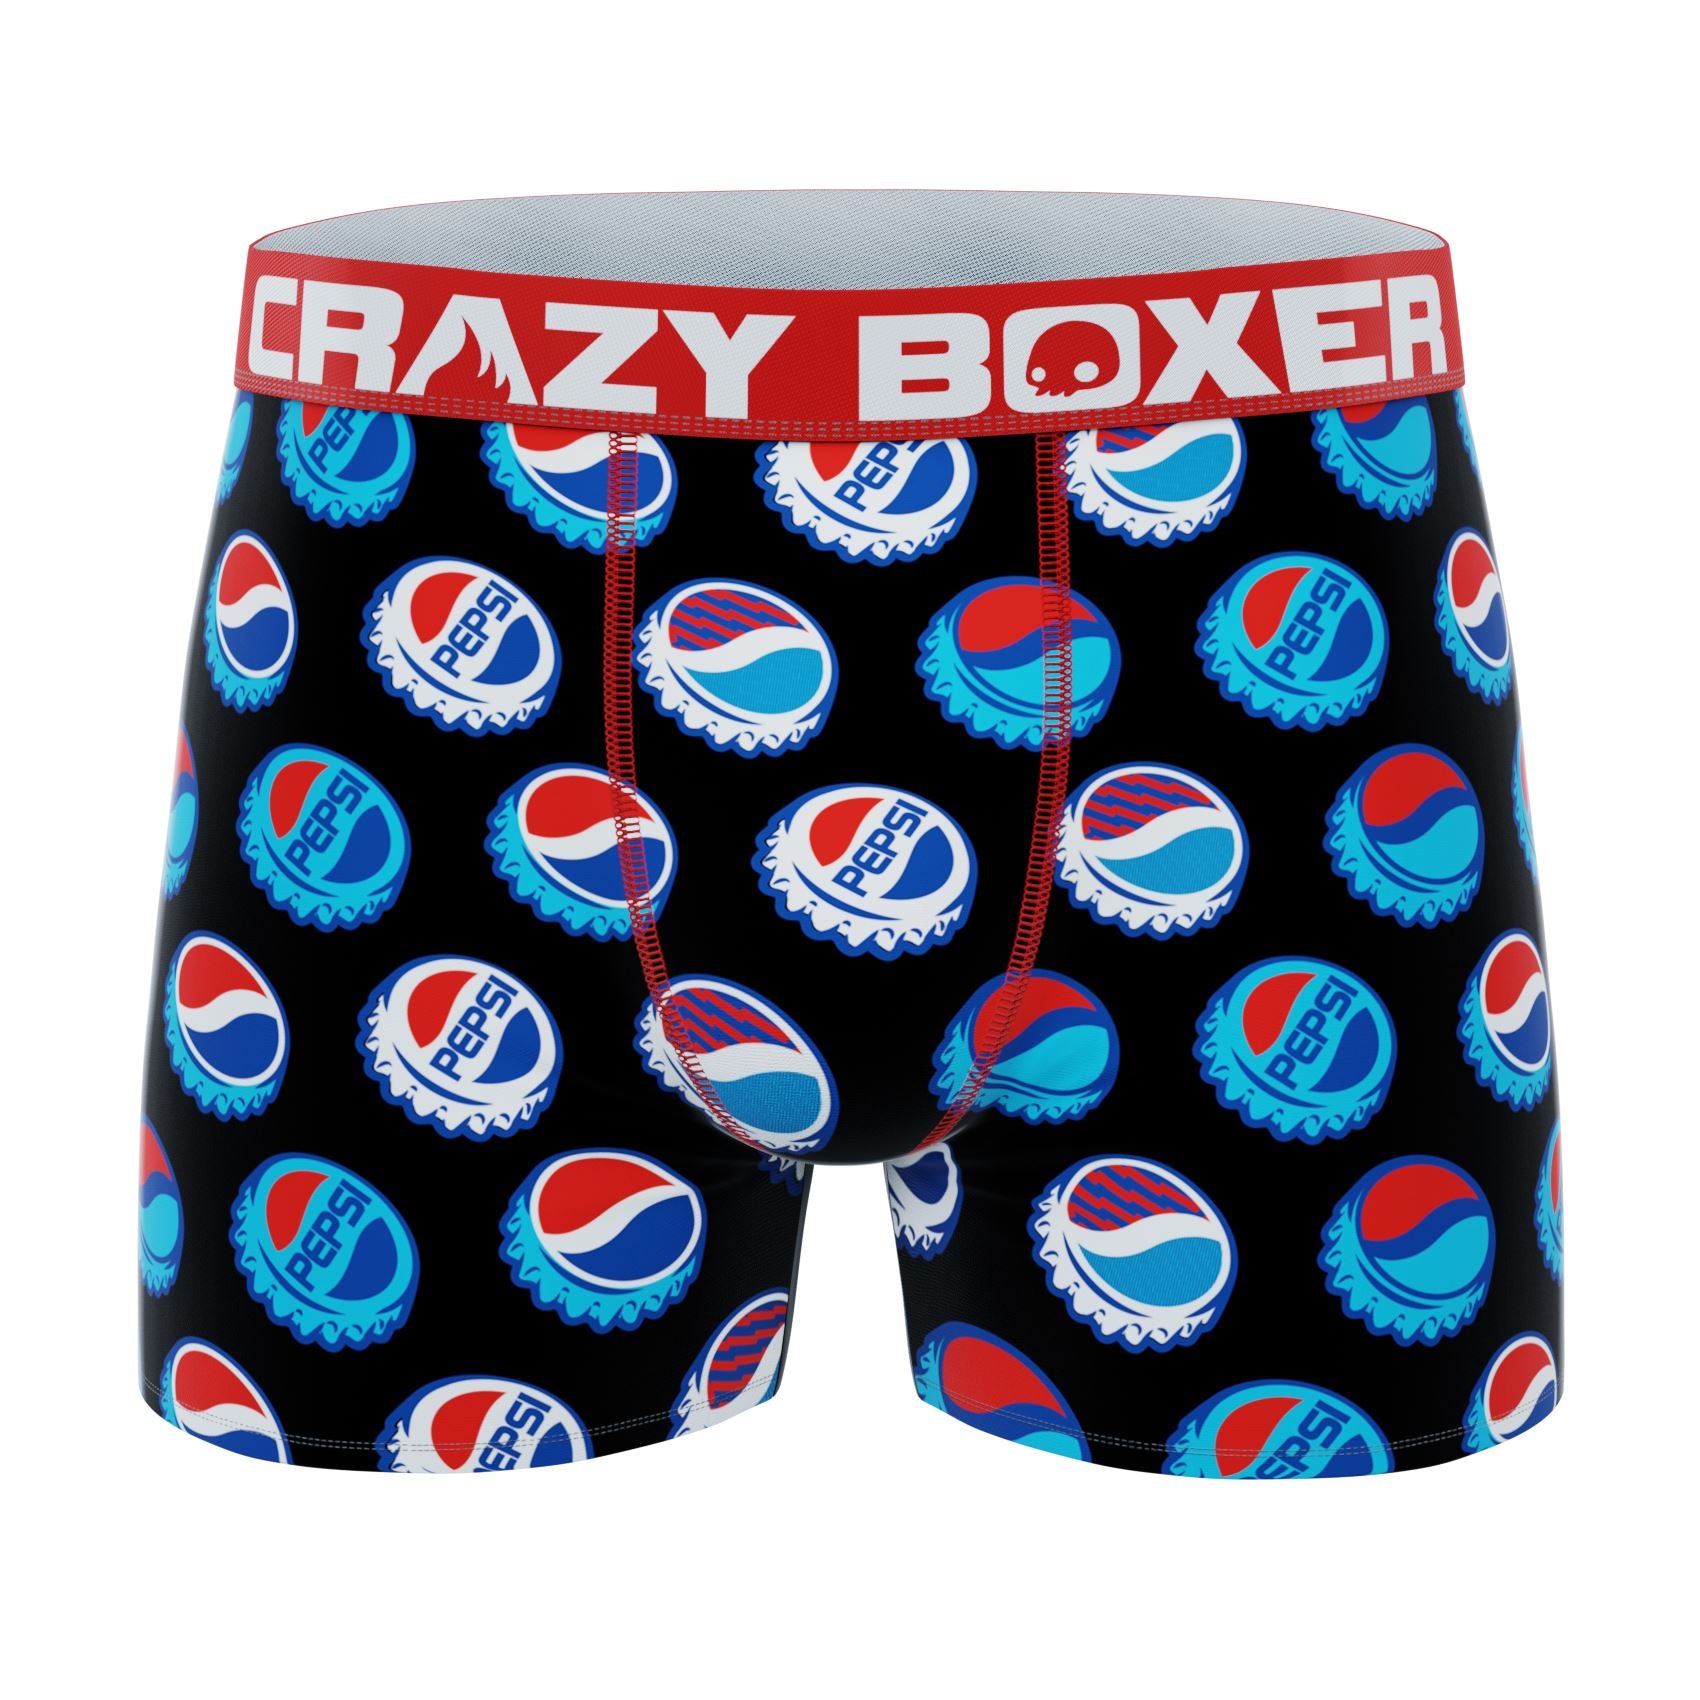 CRAZYBOXER Pepsi Men's Boxer Briefs